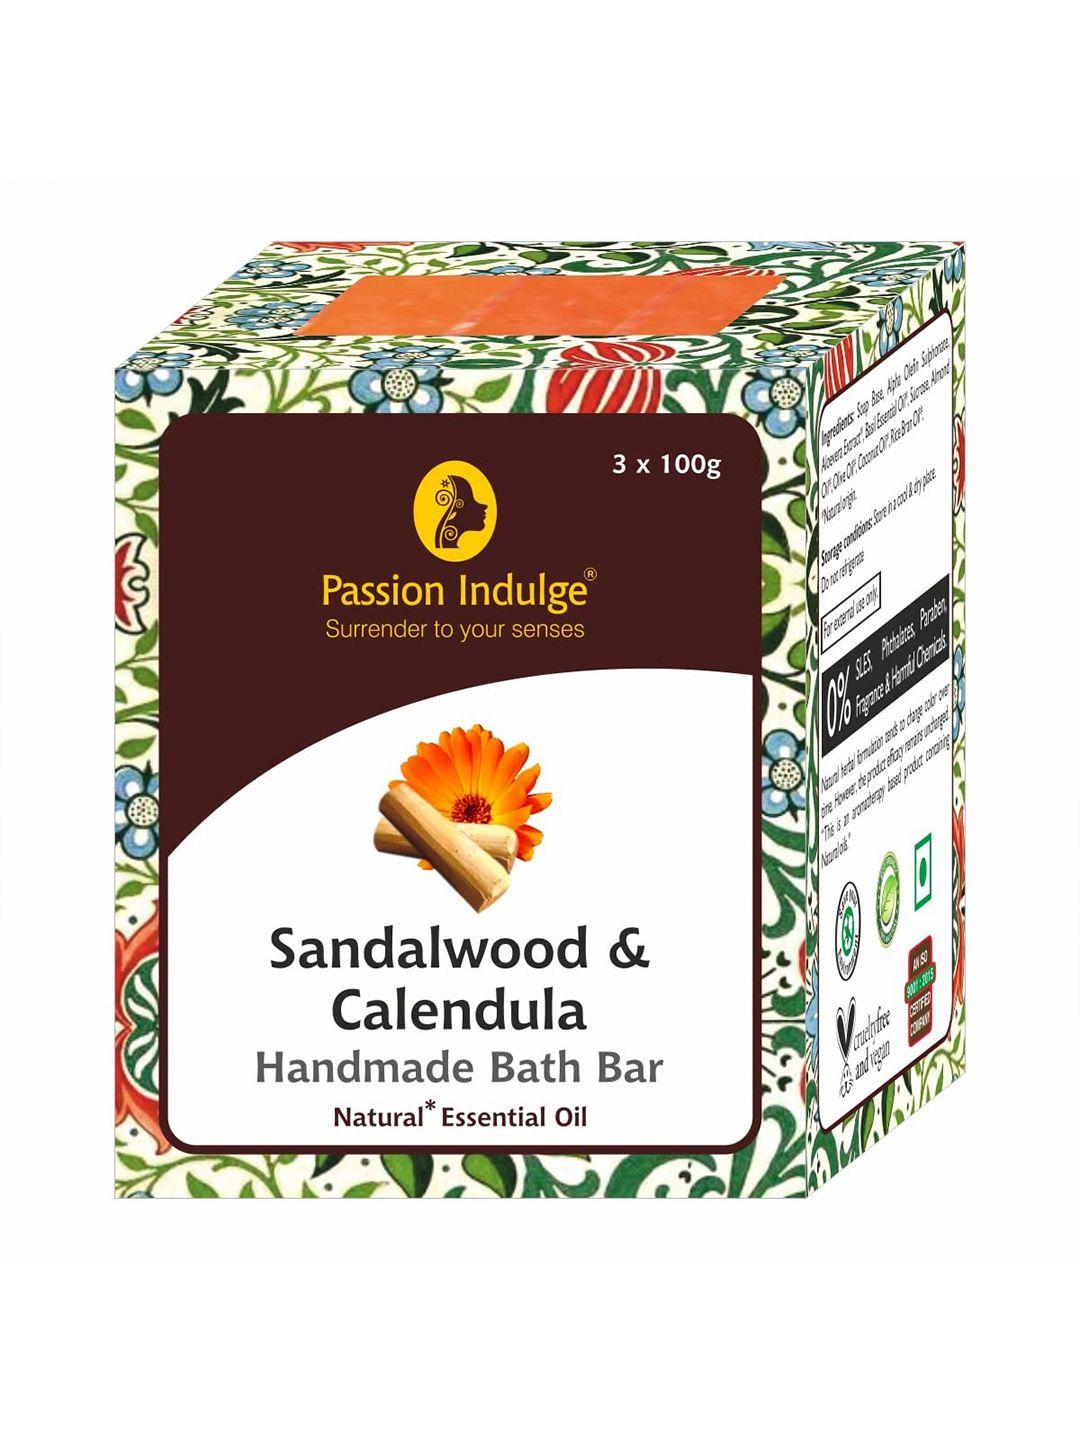 passion indulge pack of 3 natural handmade sandalwood & calendula bath bar soaps